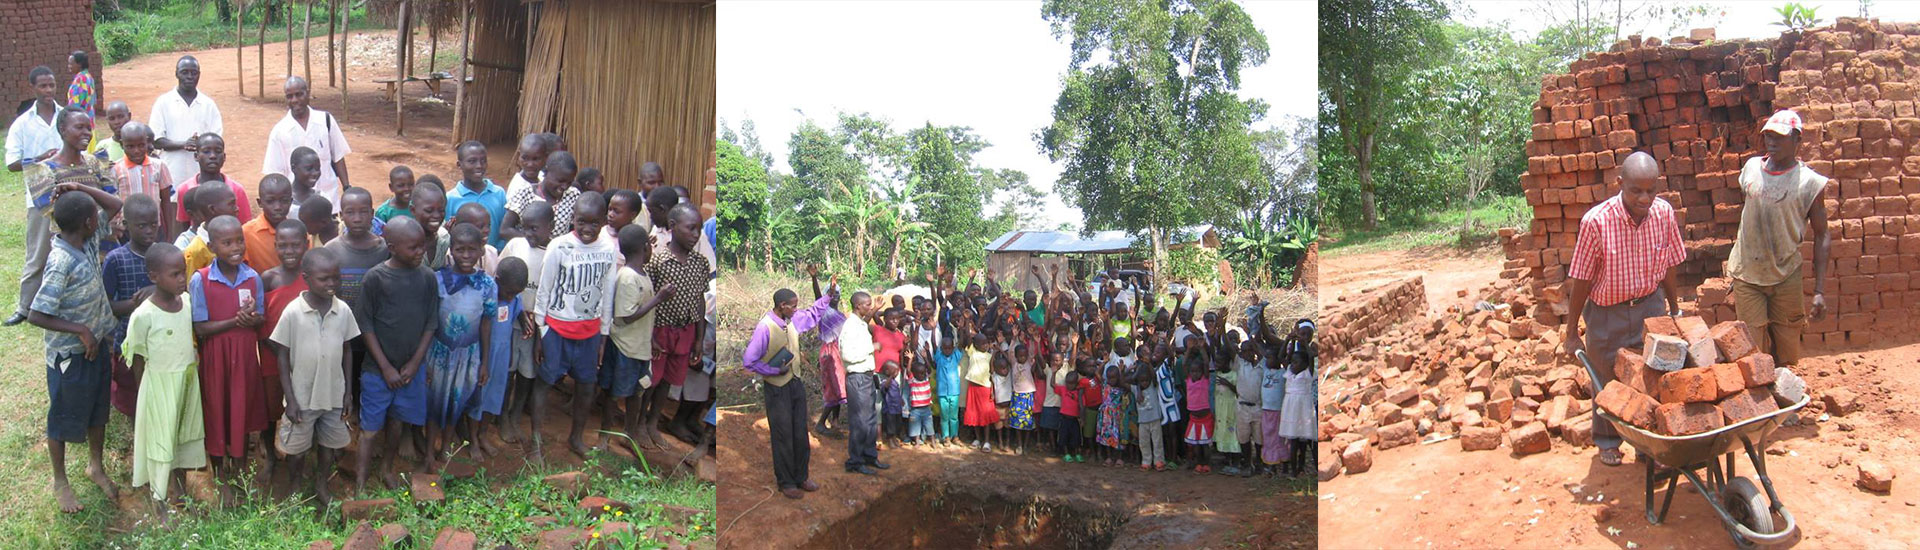 Building of Orphanage in Uganda